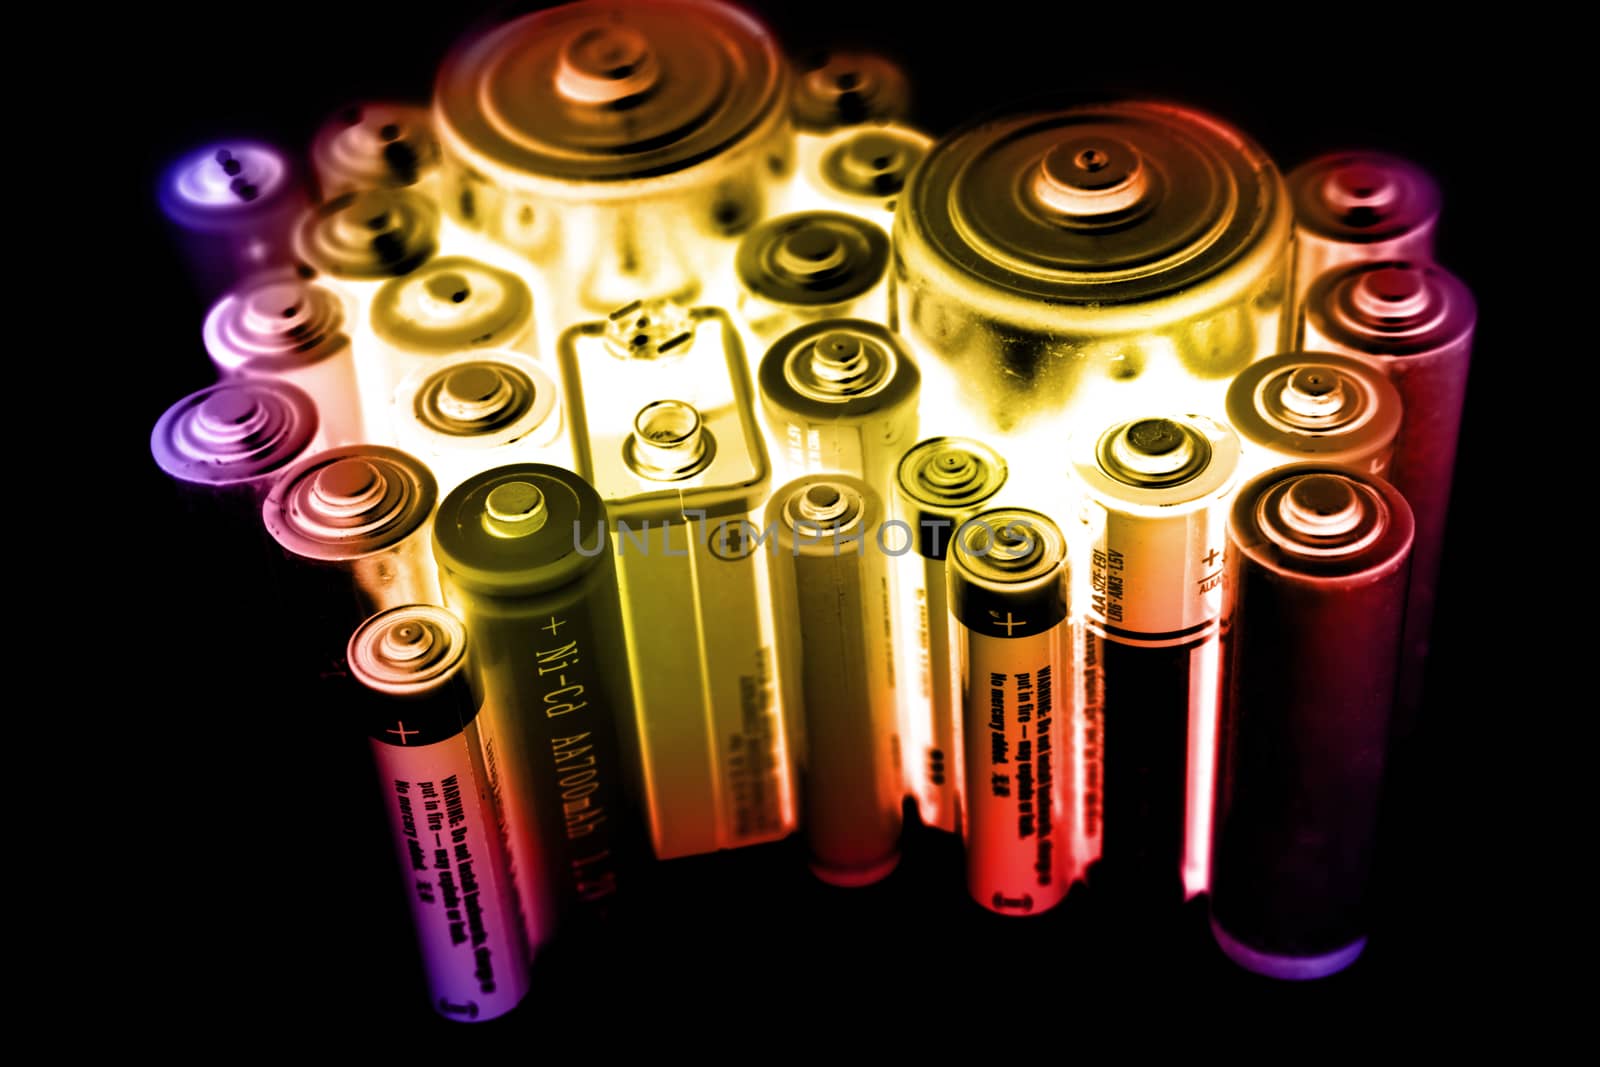 Batteries by Stillfx